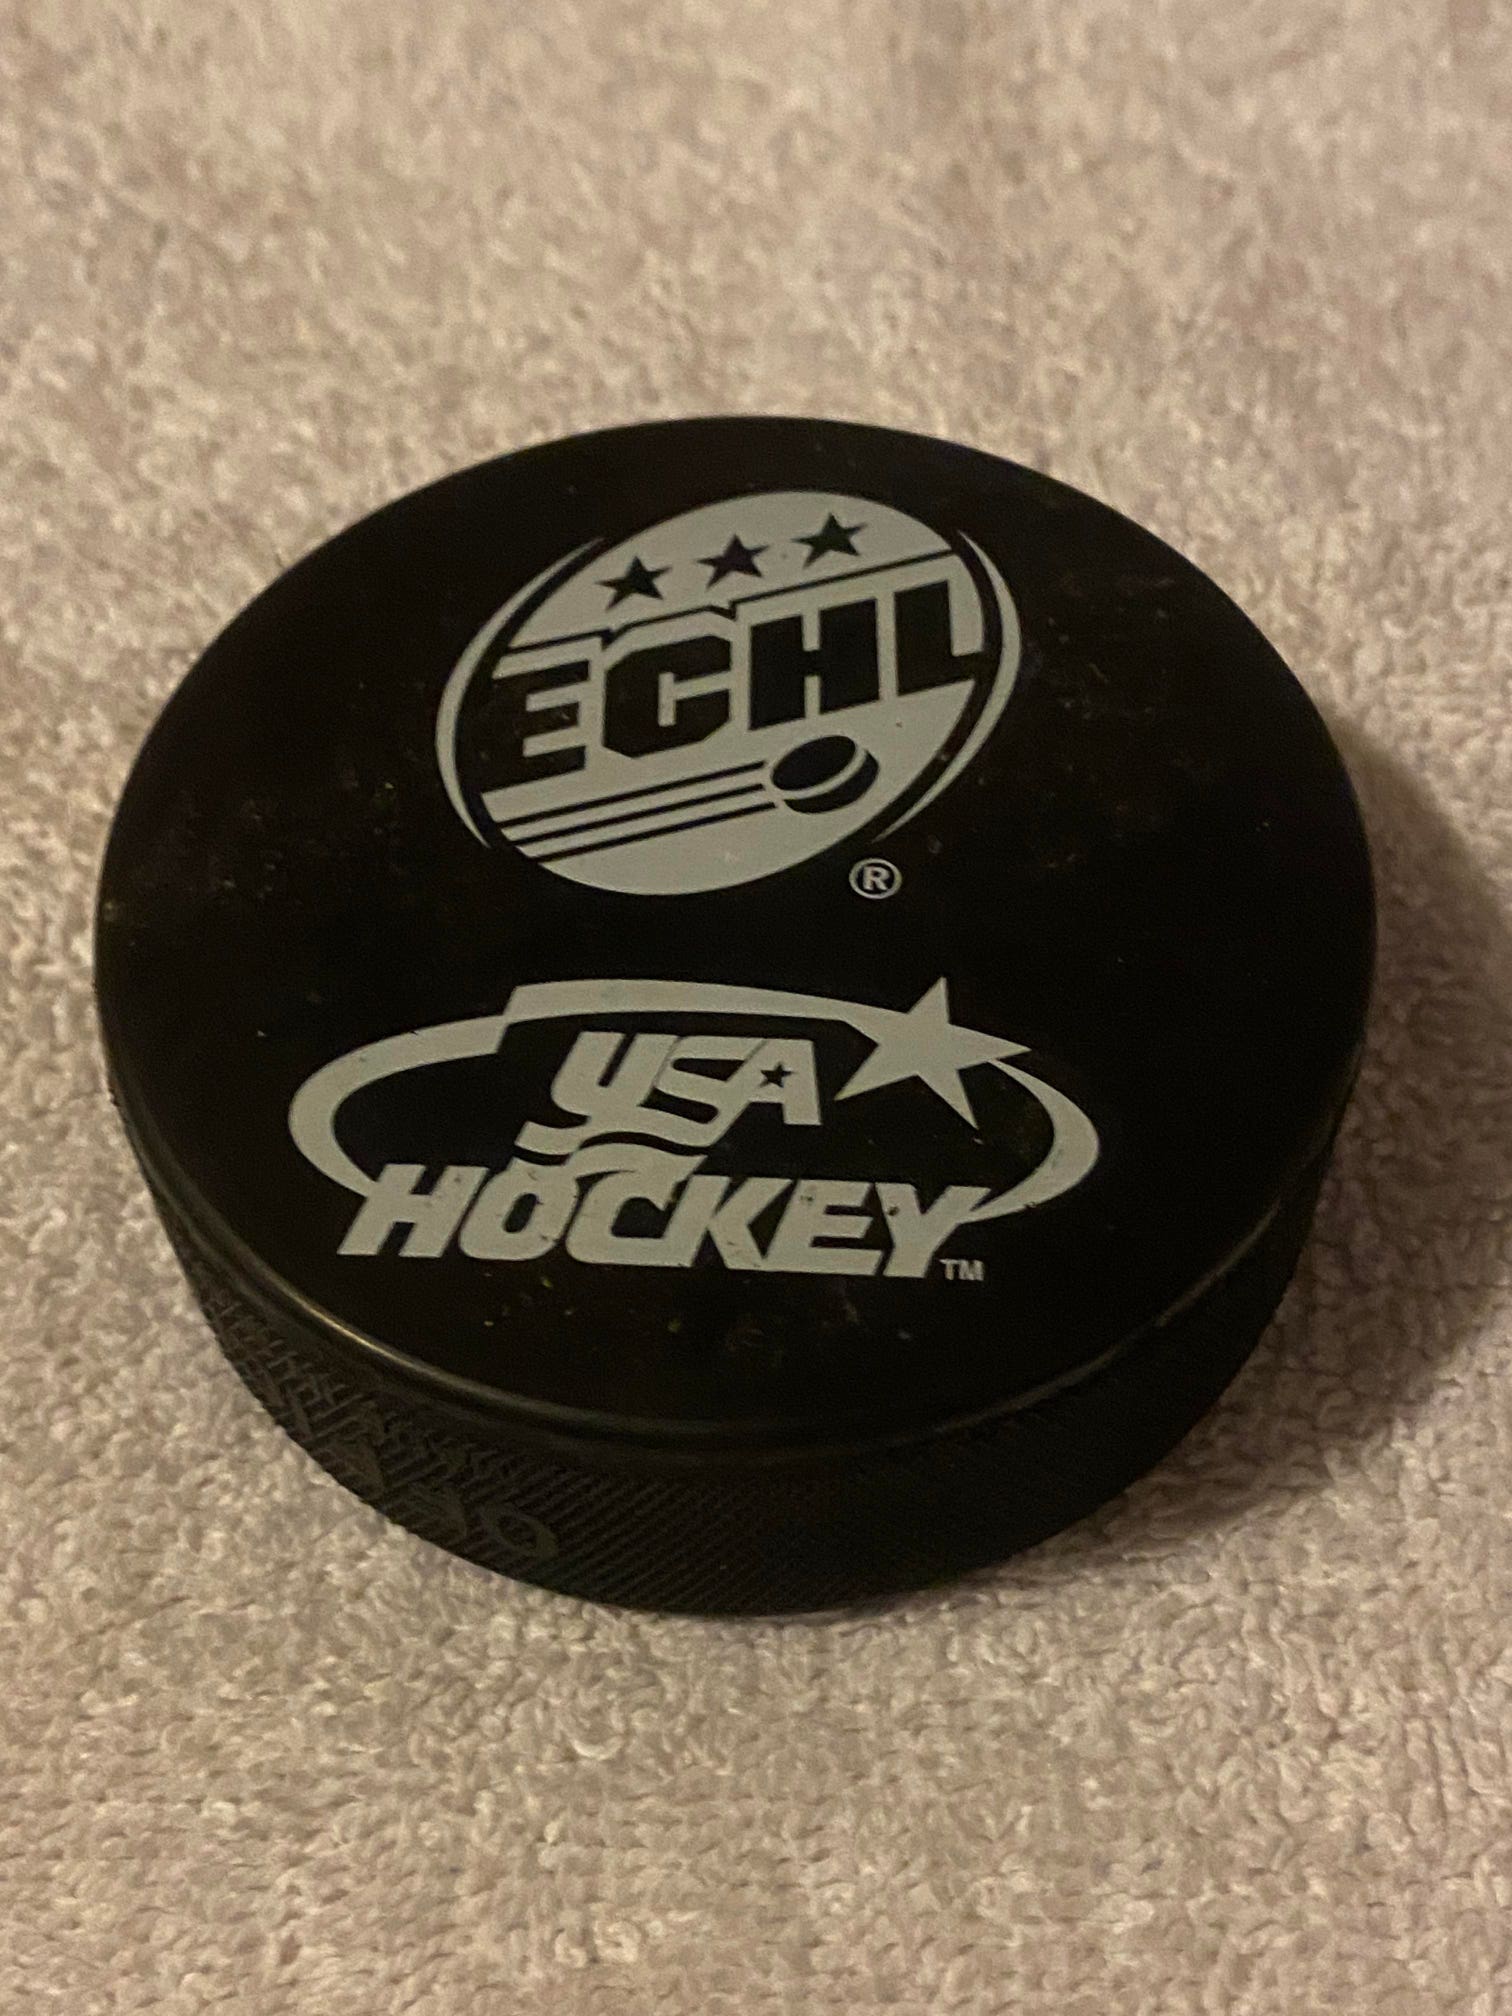 ECHL Minor League Hockey Official Hockey Logo Puck